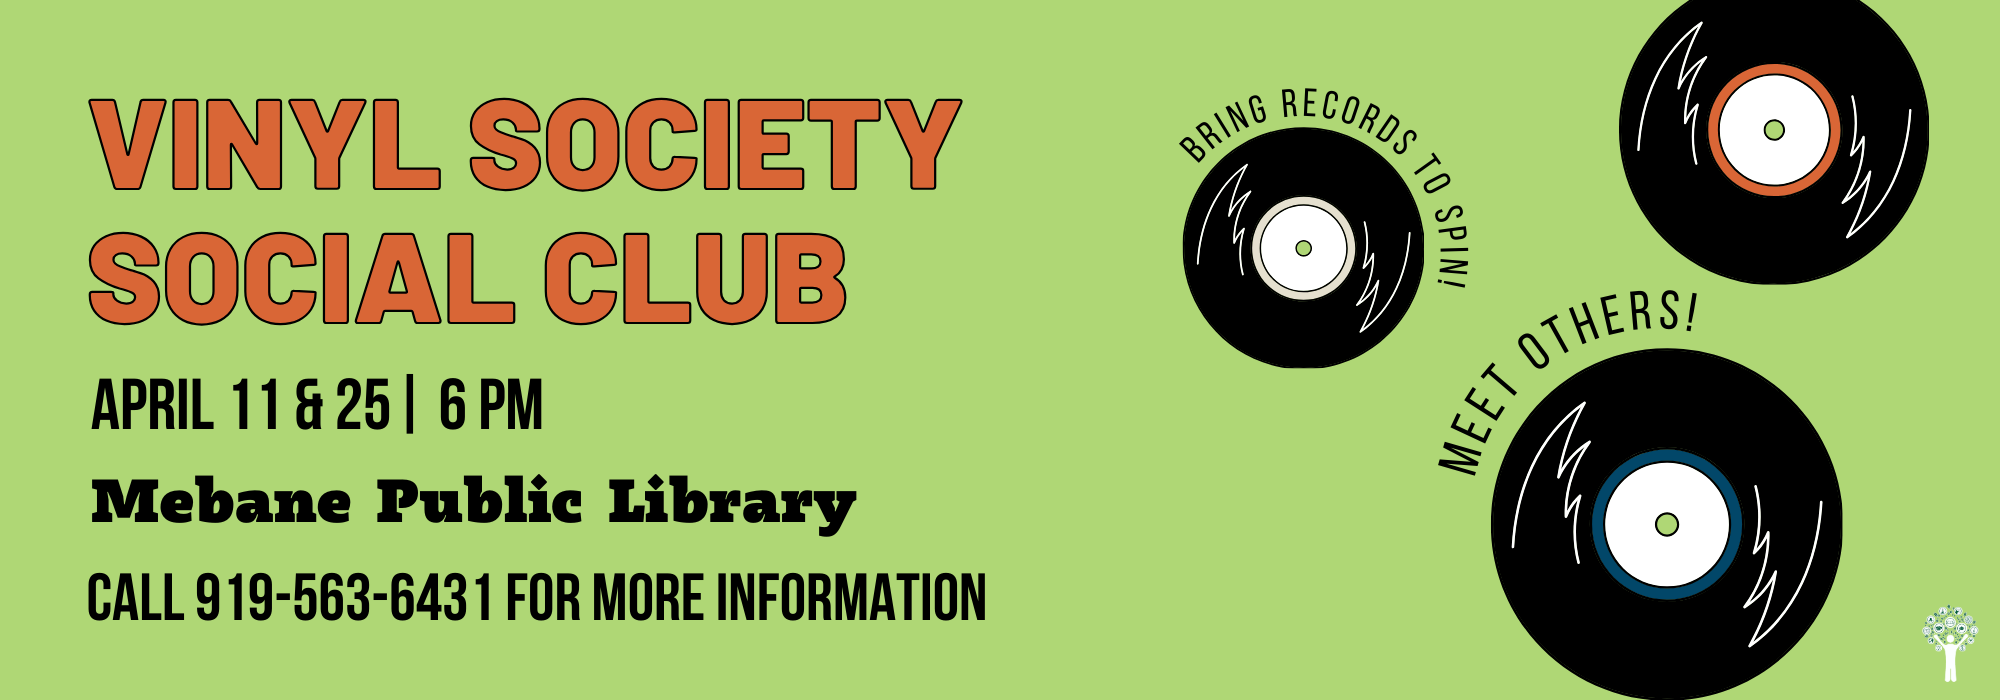 April Meb Vinyl Society Social Club banner